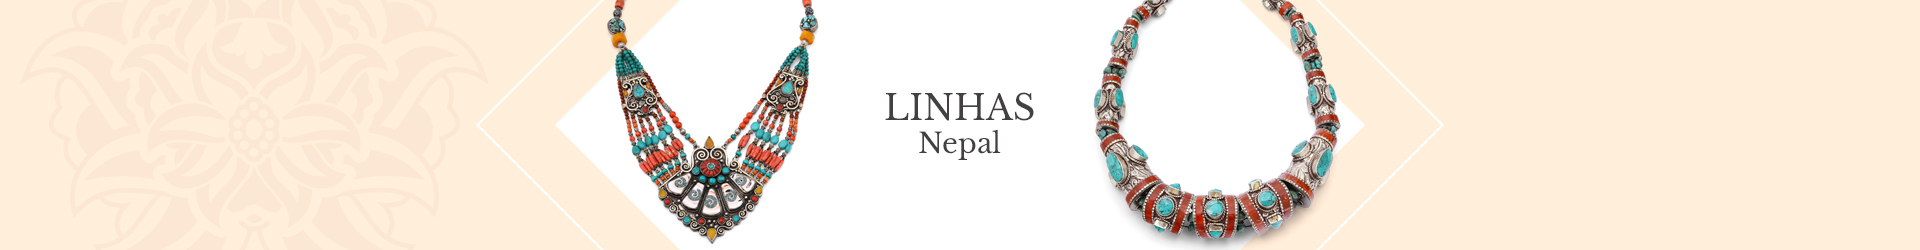 Linhas Nepal